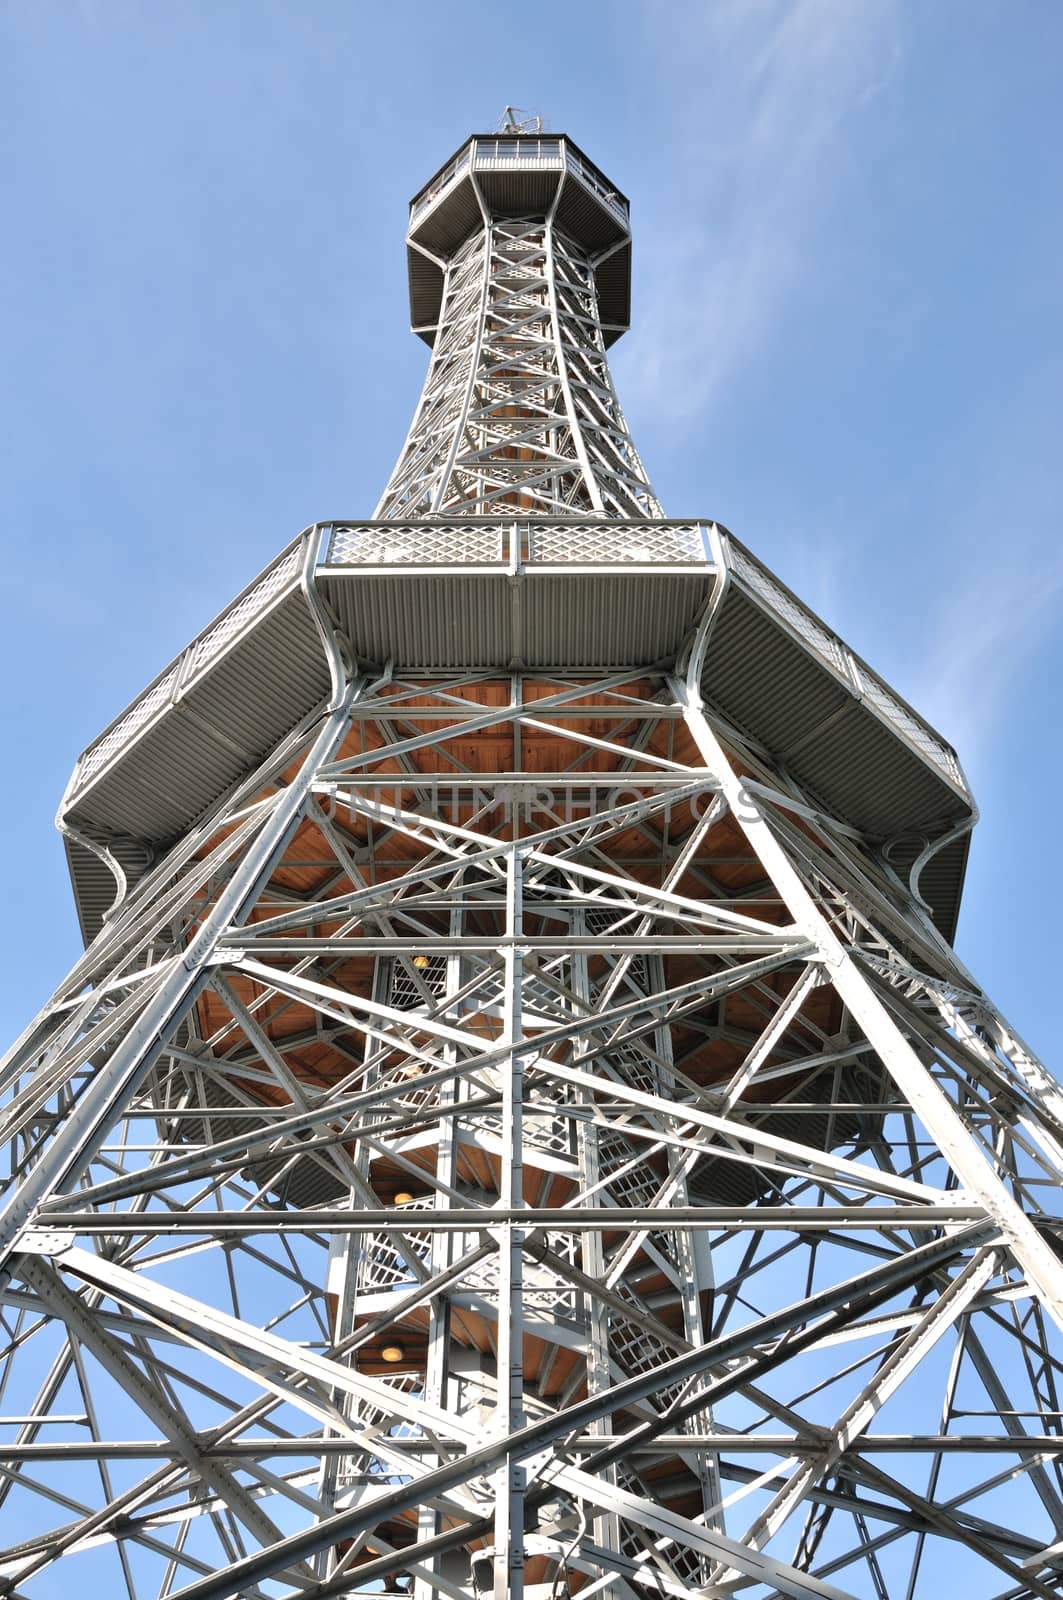 Lookout tower on Petrin Hill in Prague, Czech Republic.